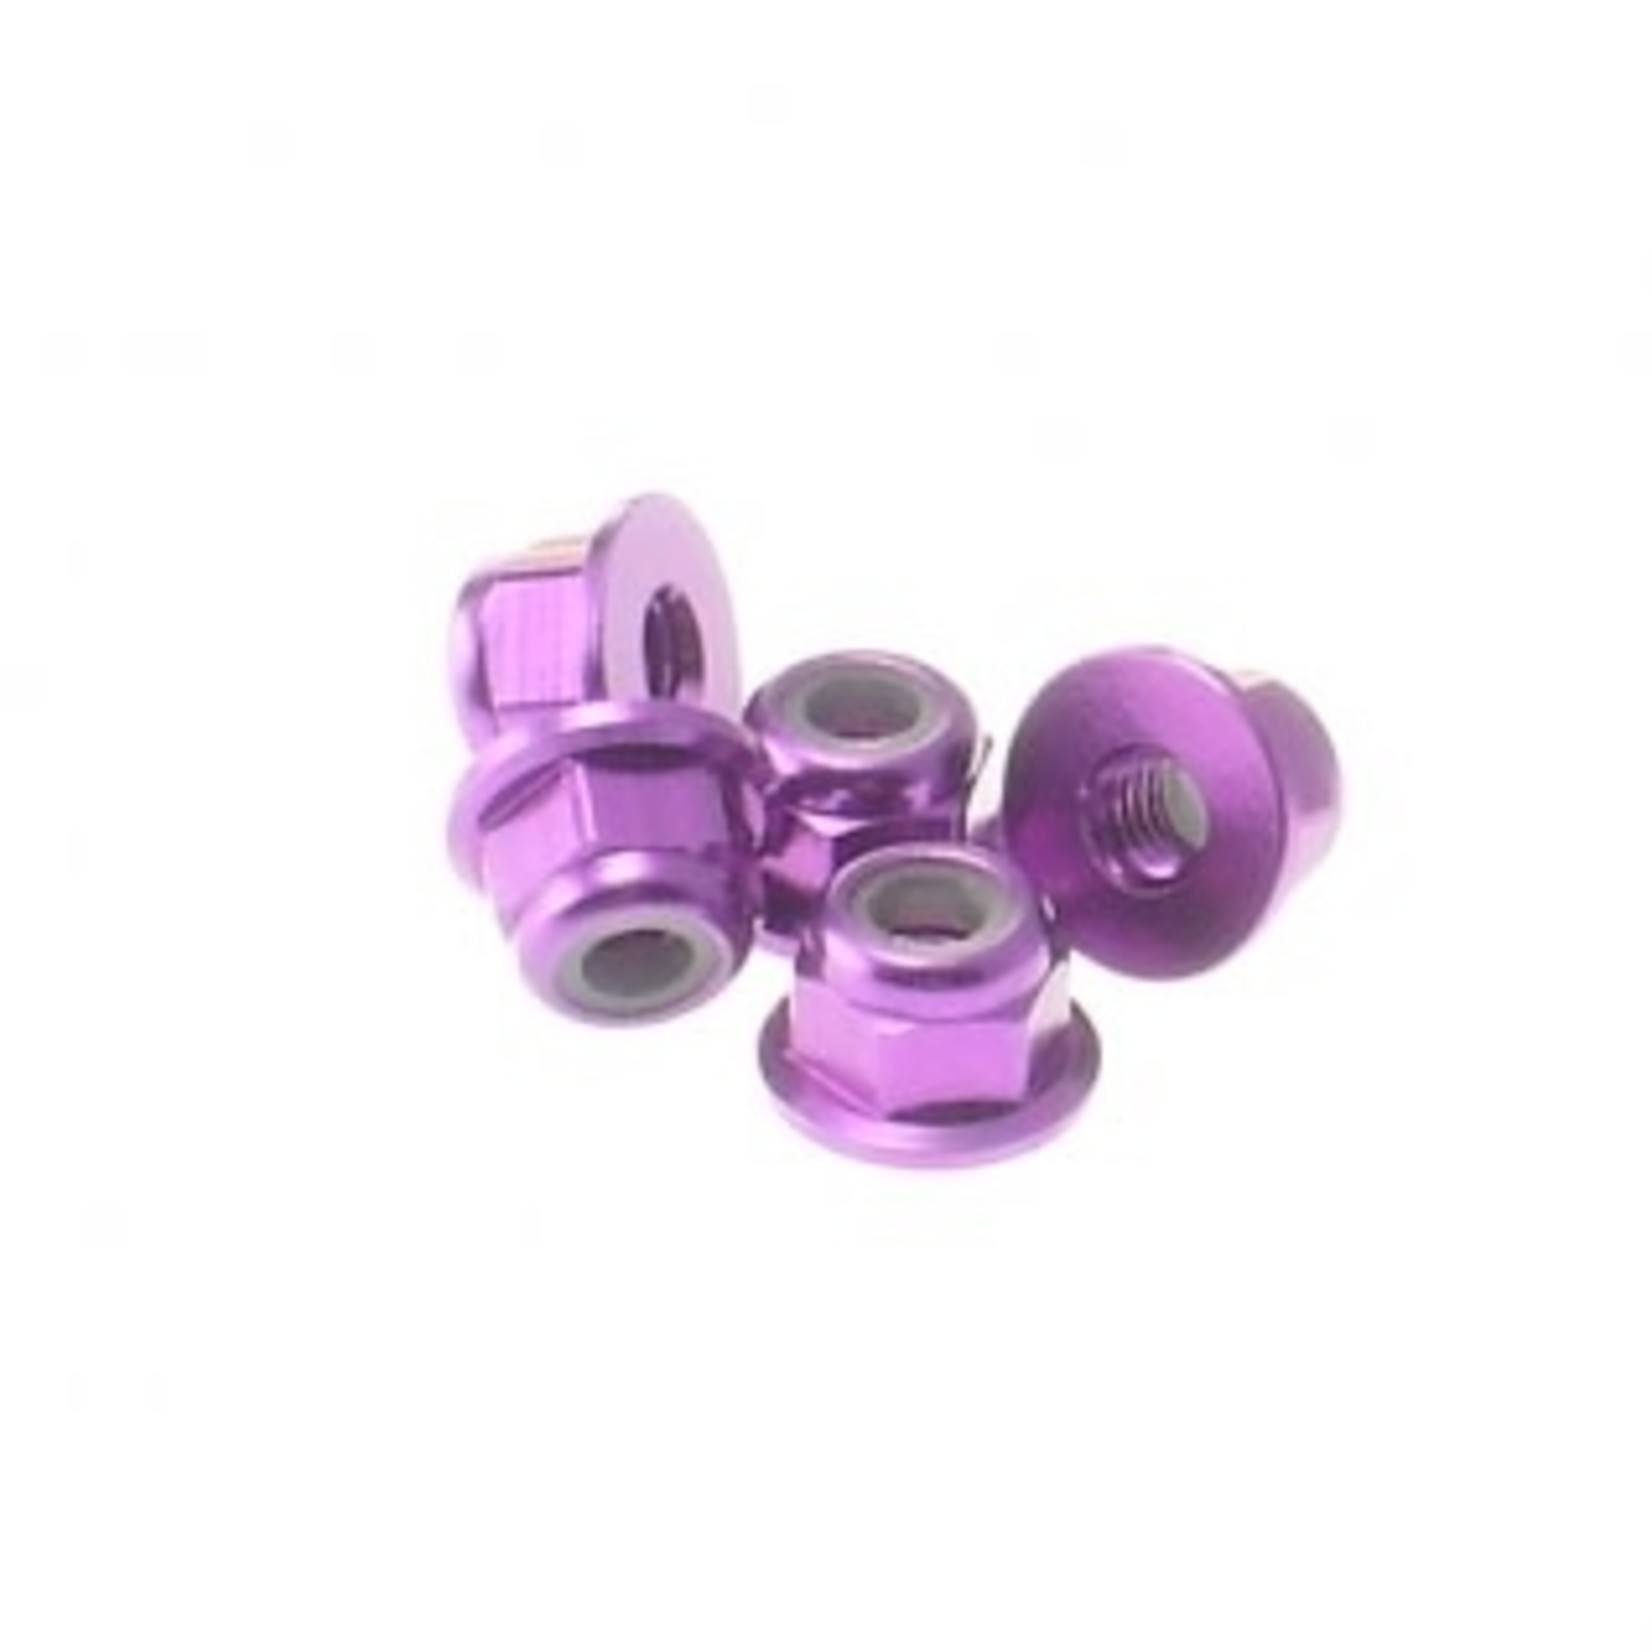 Hiro seiko HSI 3mm Alloy Flange Nylon Nut Purple (5pcs)